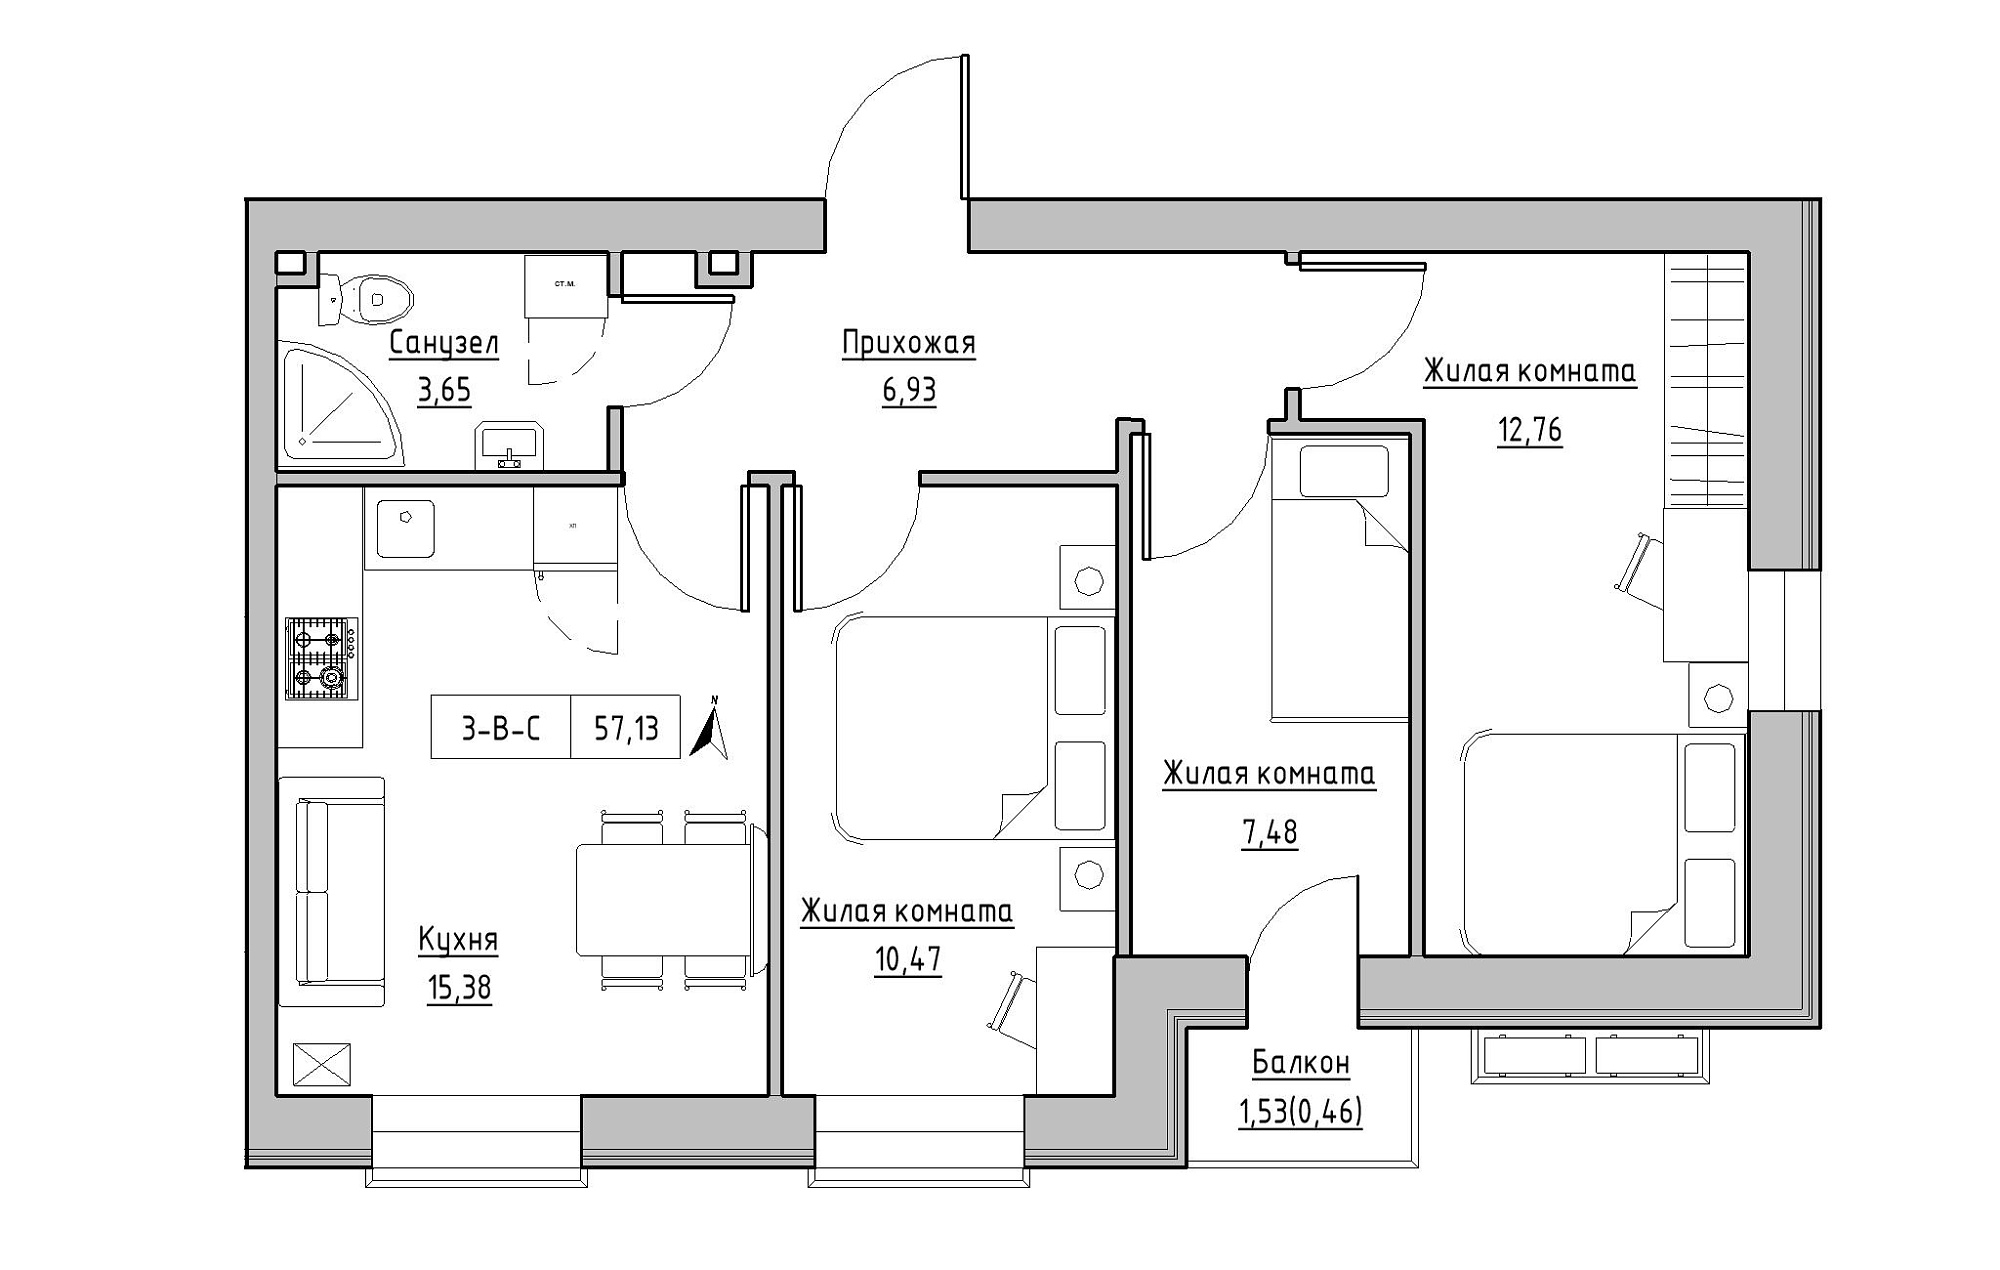 Planning 3-rm flats area 57.13m2, KS-019-03/0008.